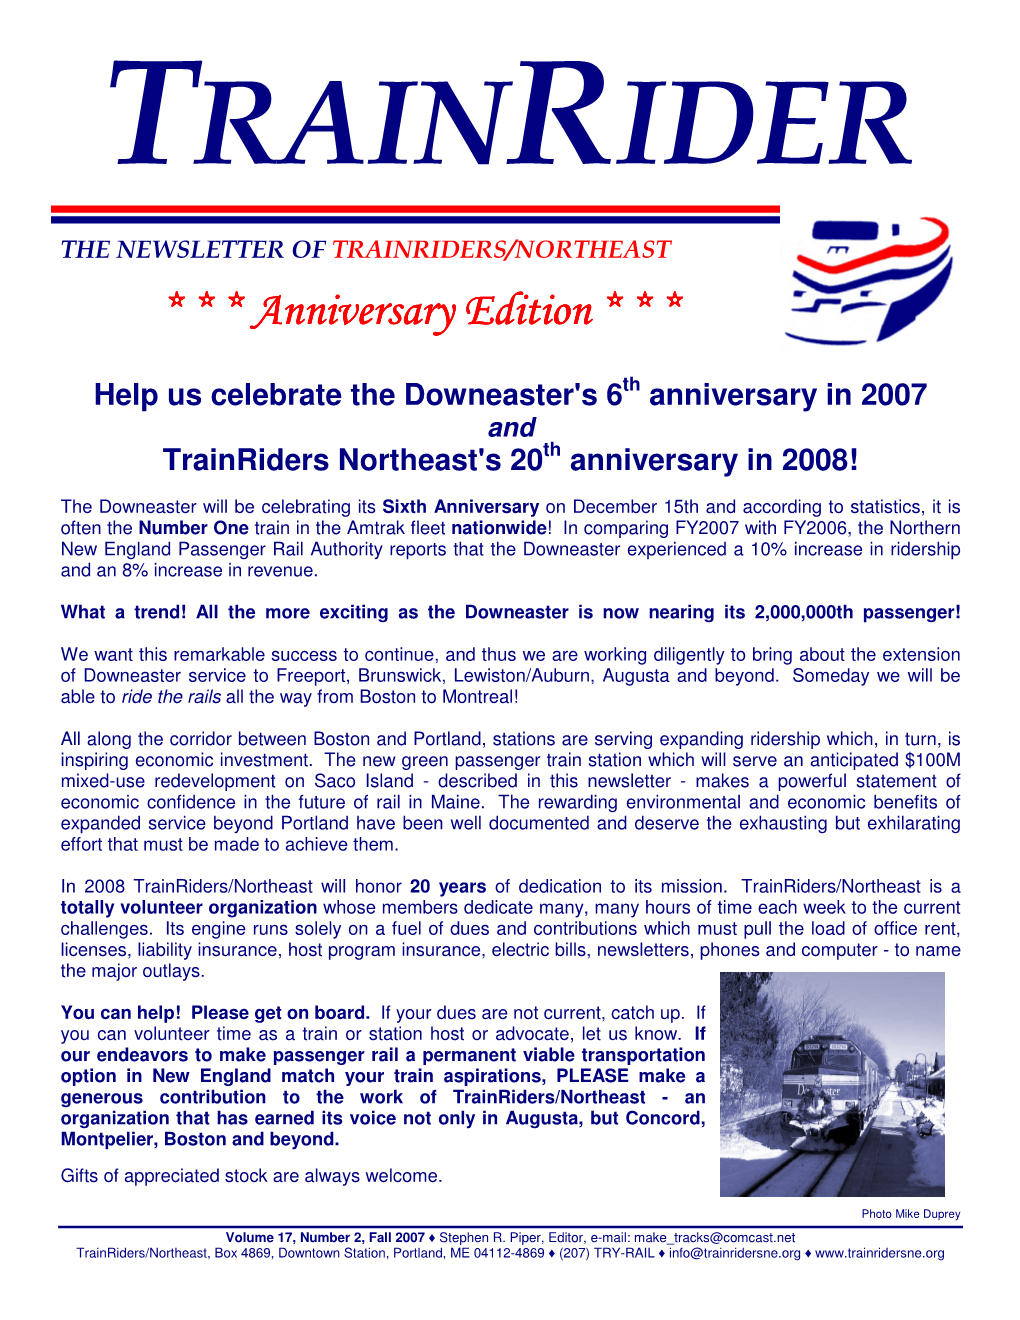 TRN Celebrates 20 Years